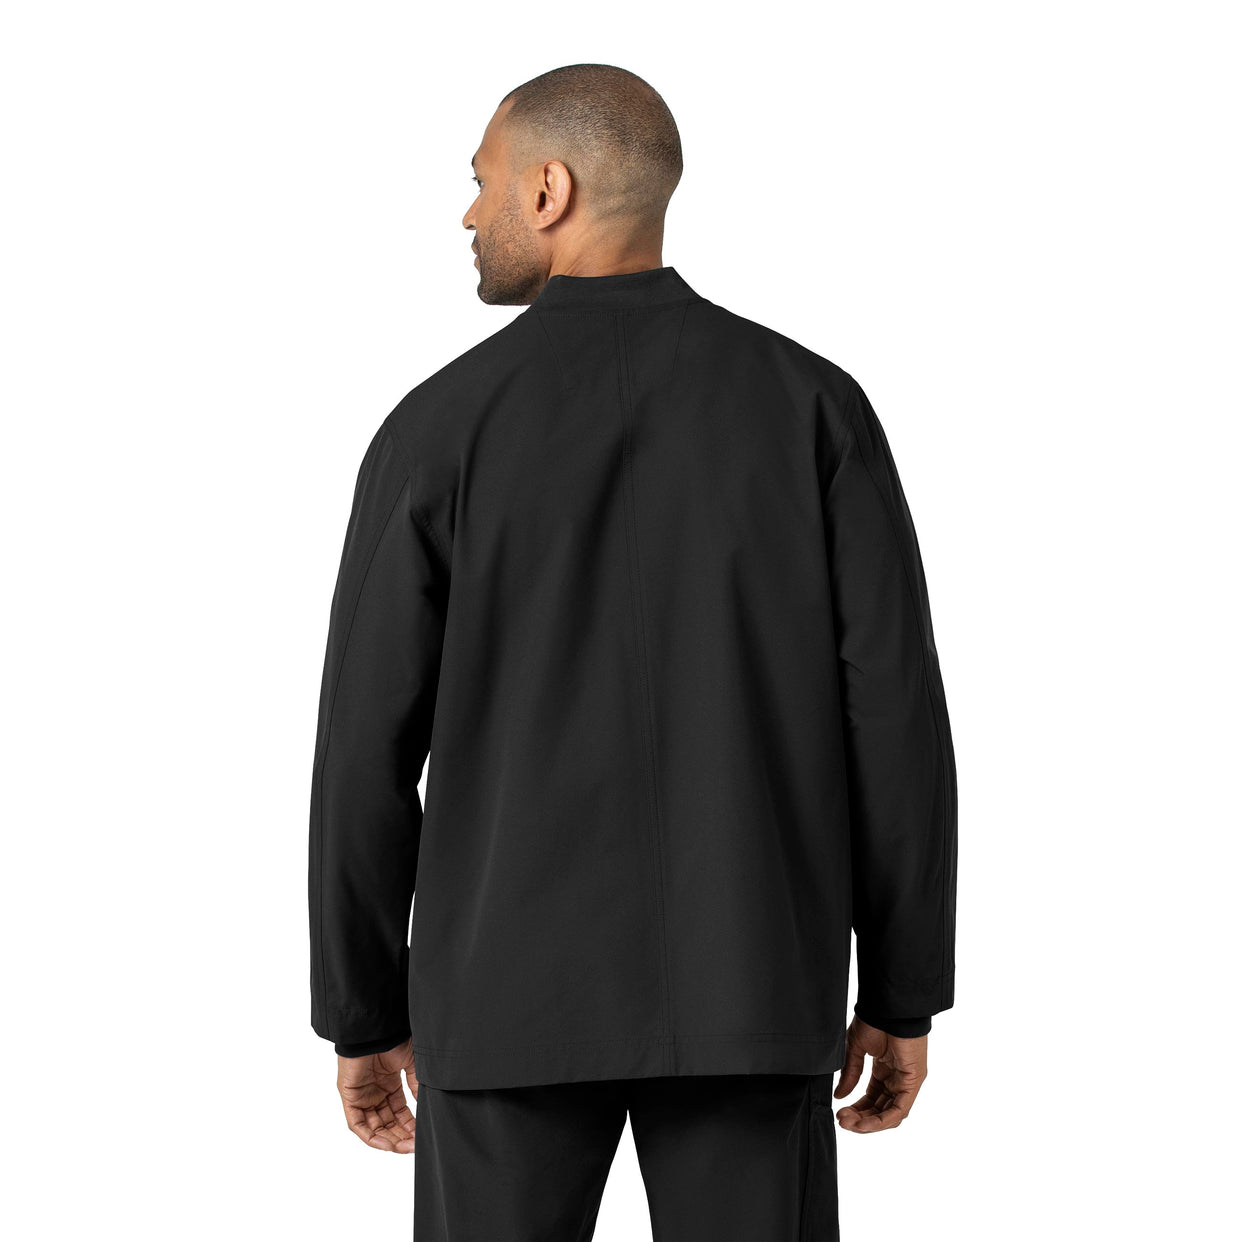 Force Essentials Unisex Chore Coat Black back view